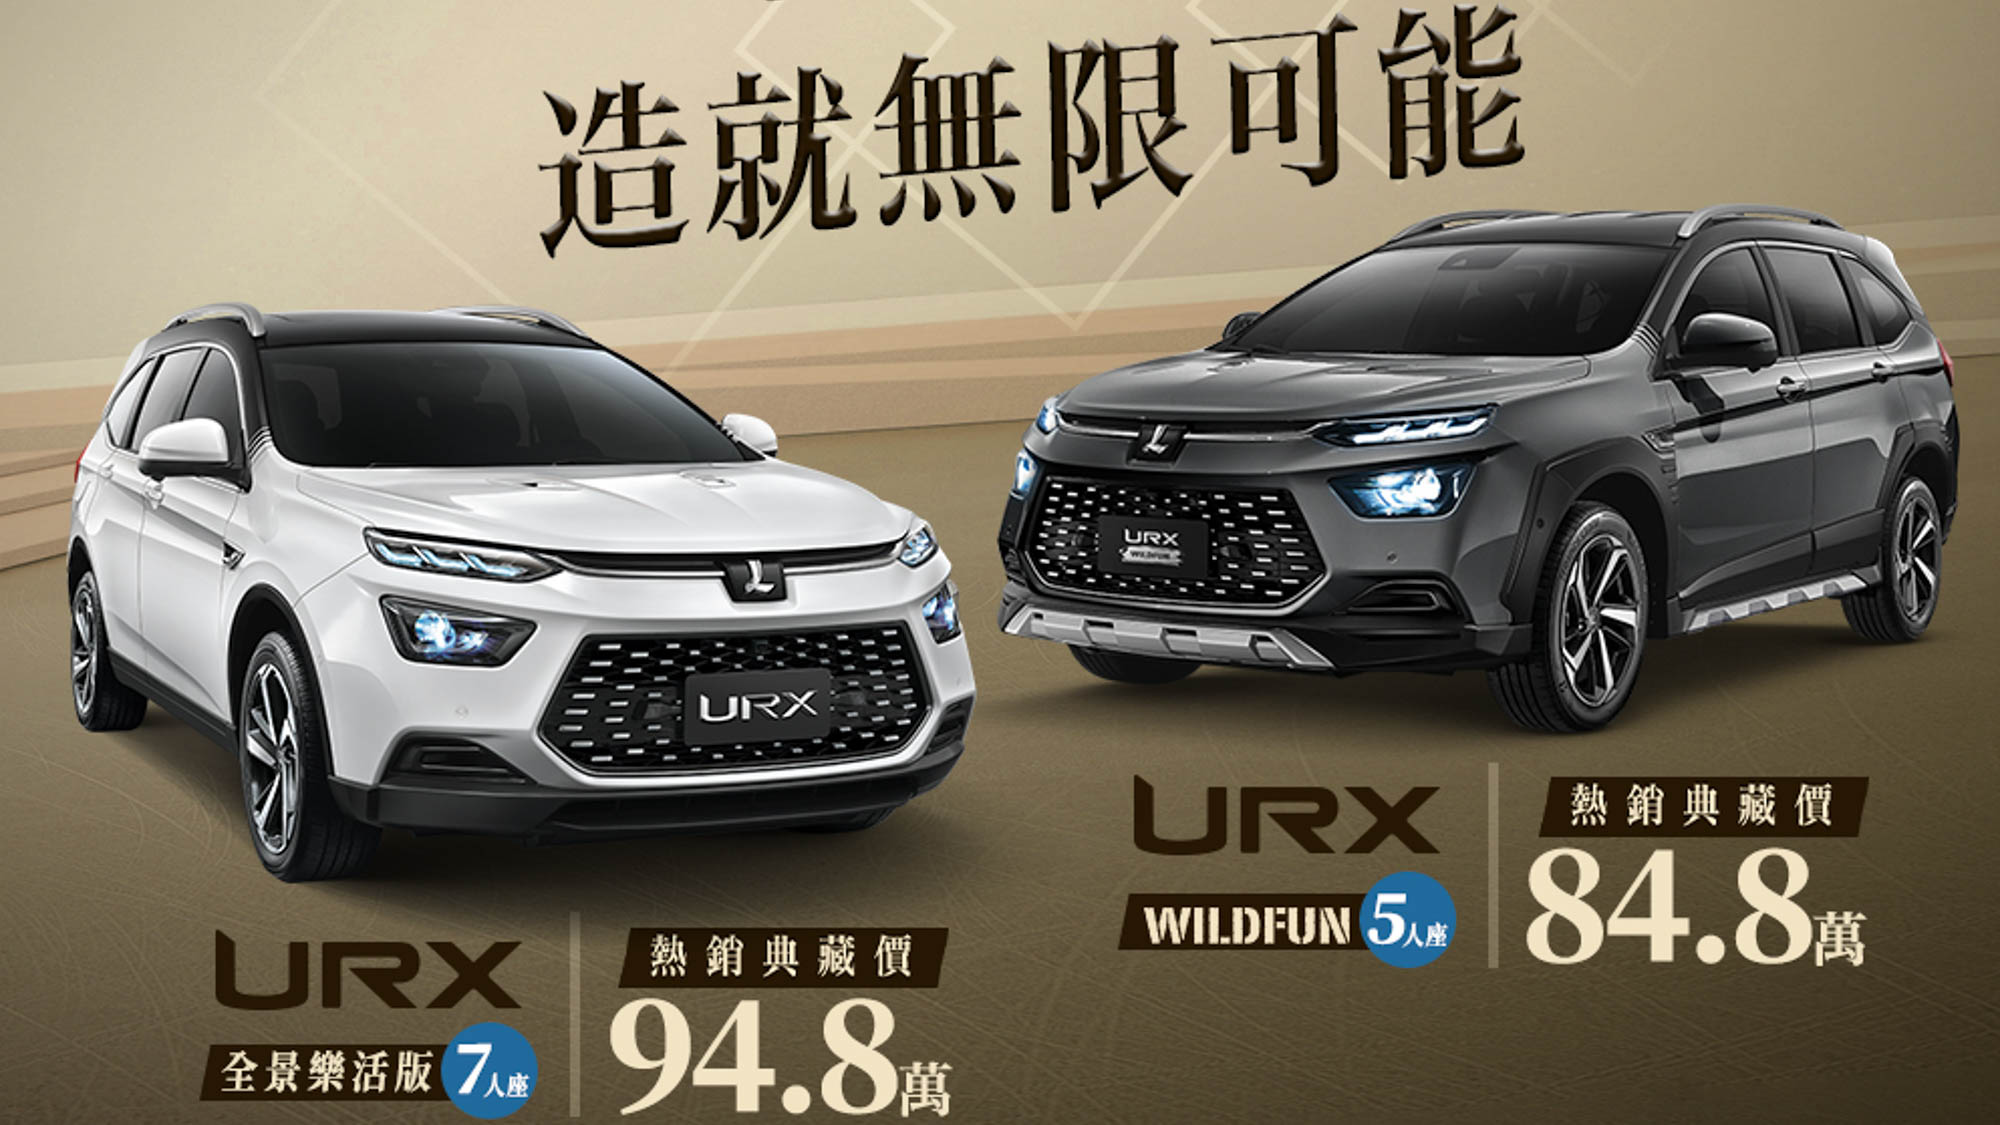 ▲ Luxgen URX「典藏價」最低 84.8 萬限量追加 200 台